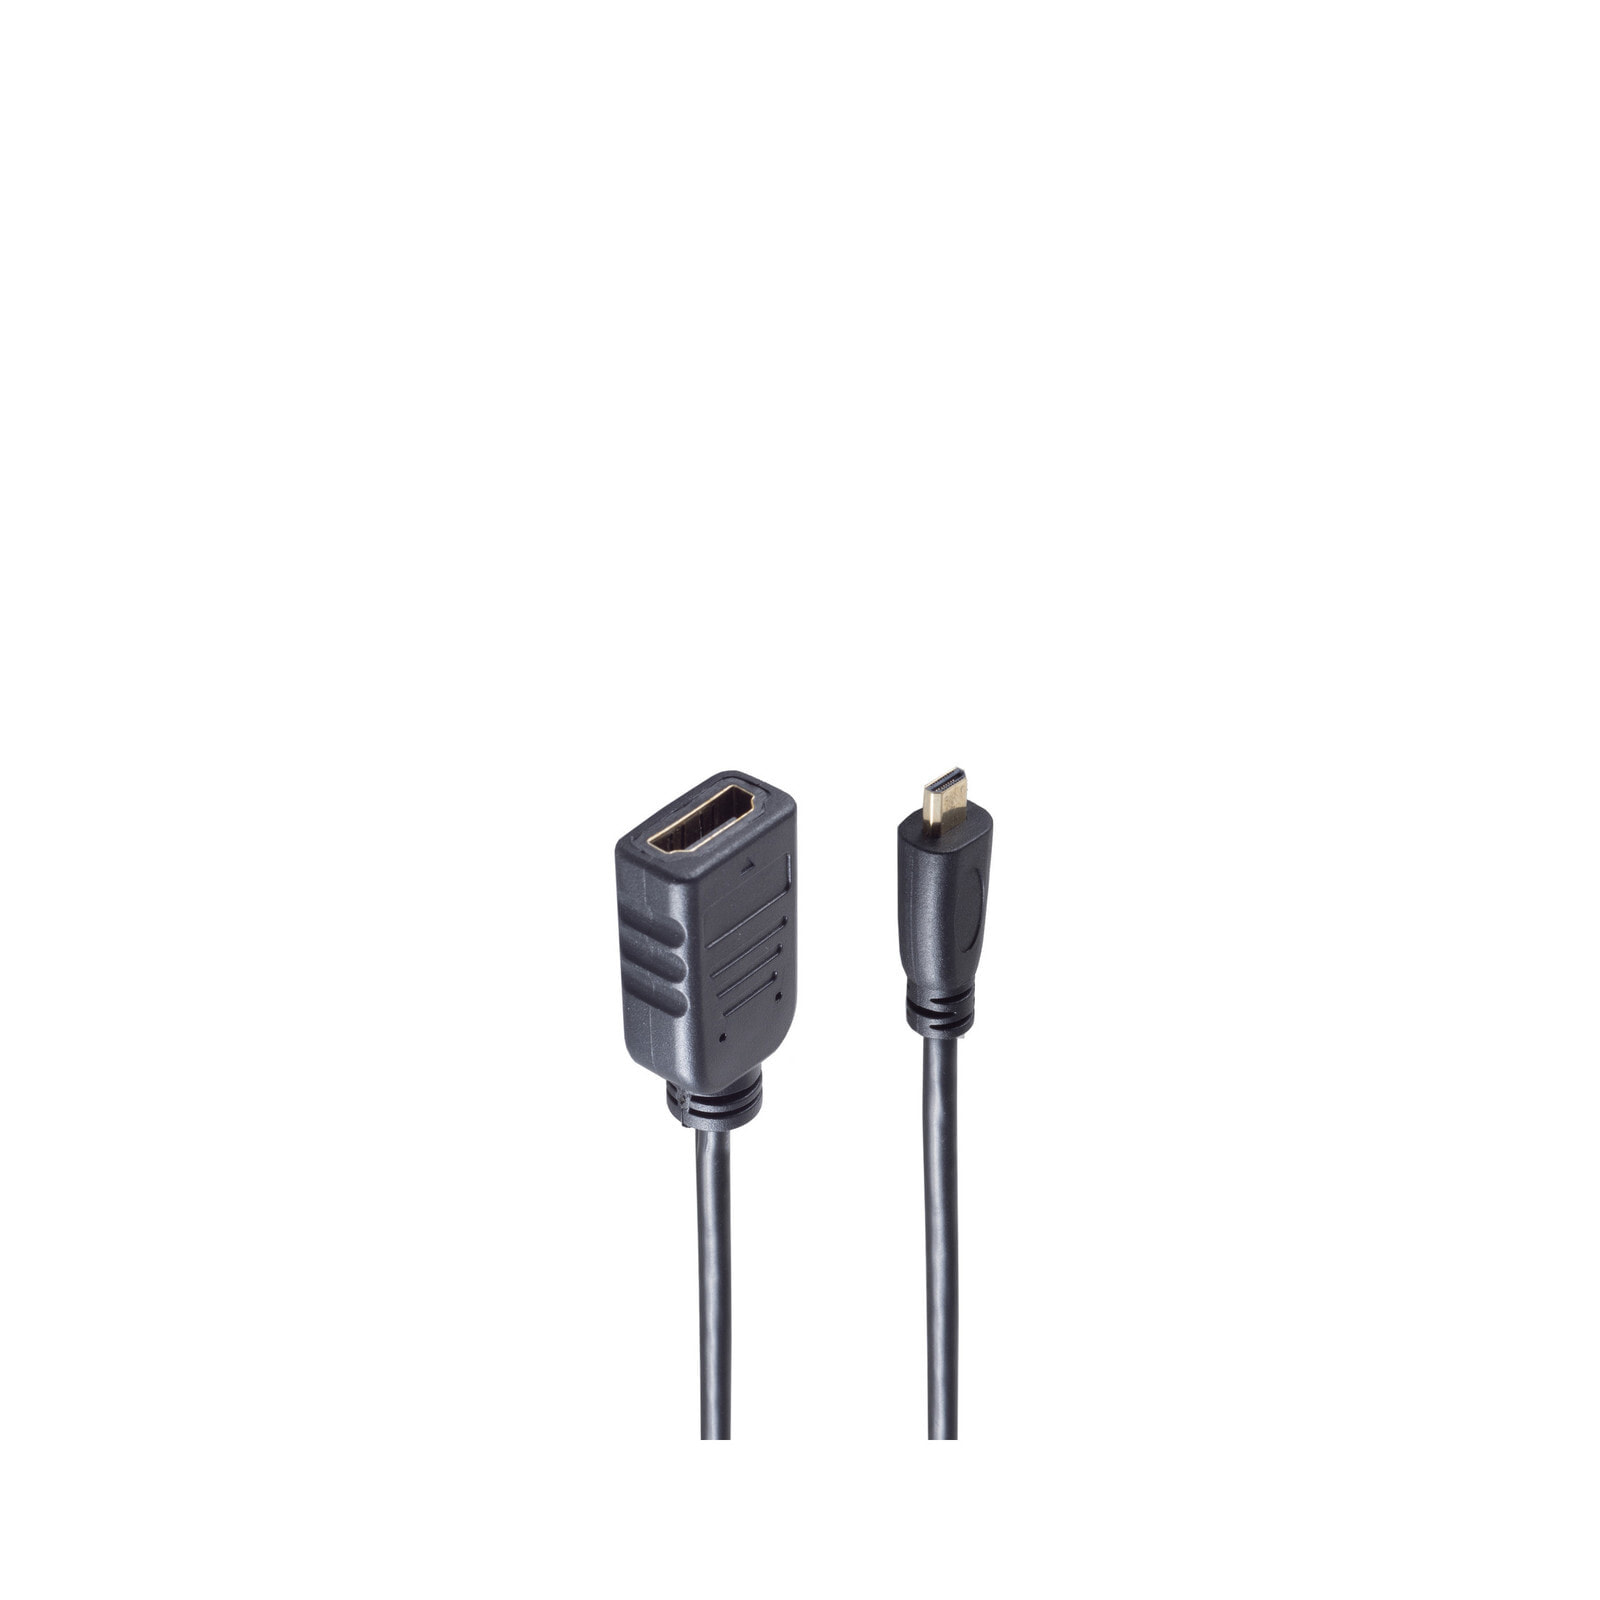 shiverpeaks BS10-56045 видео кабель адаптер 3 m HDMI Тип A (Стандарт) USB Type-C Черный